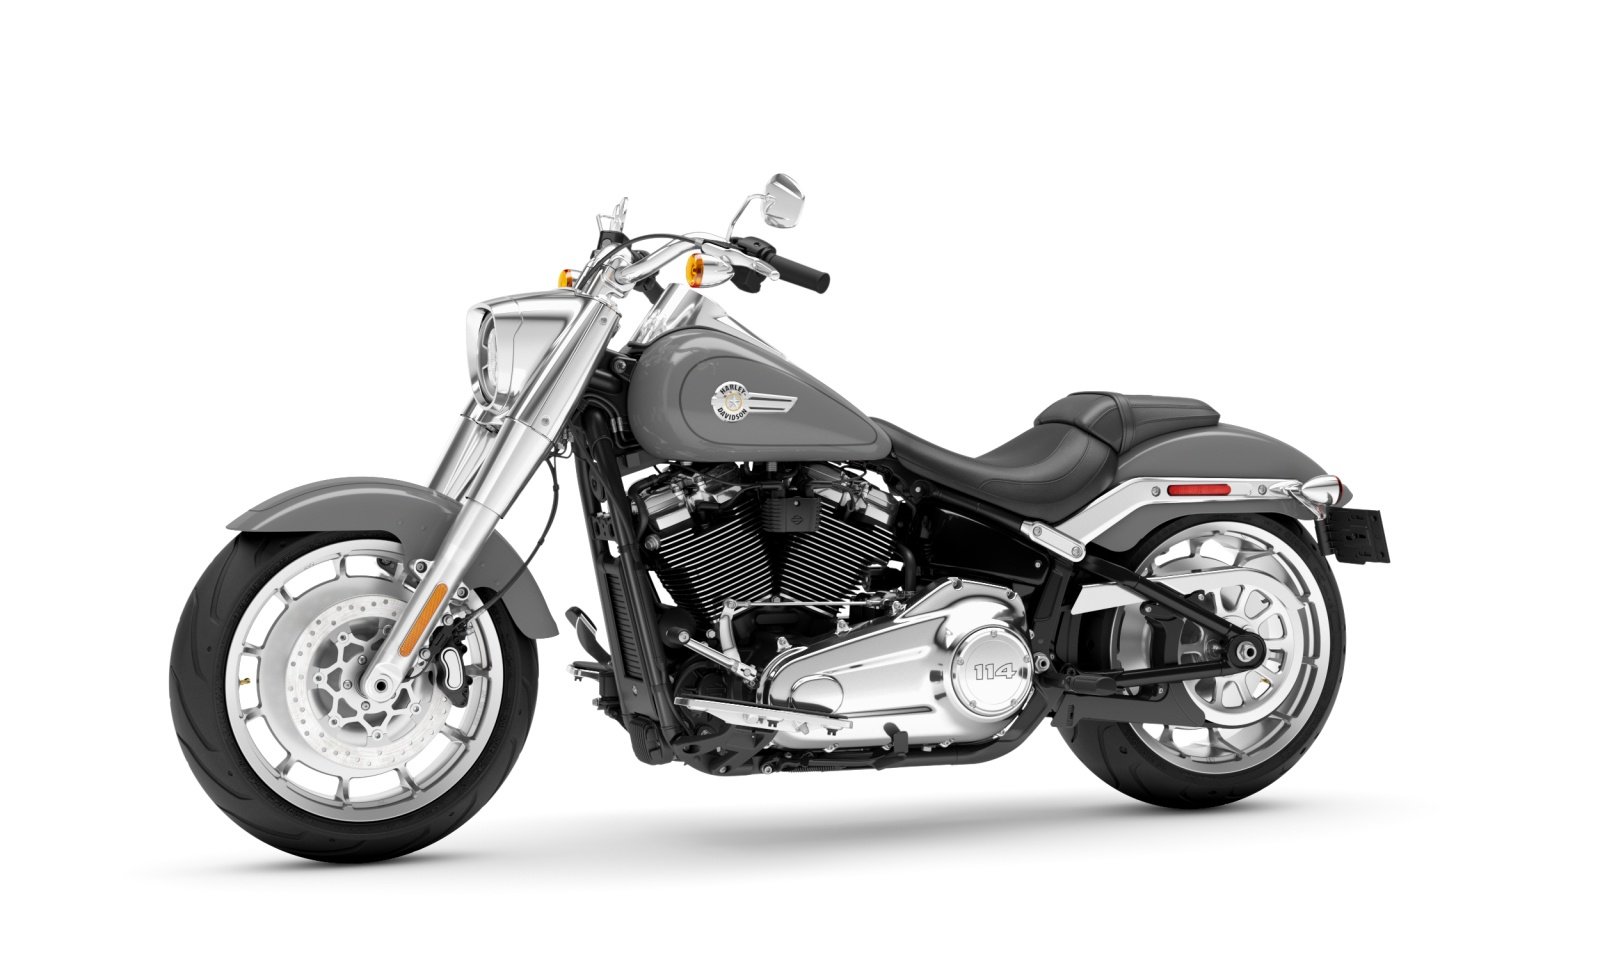 Fat Boy™ 114  Harley-Davidson® Trollhättan